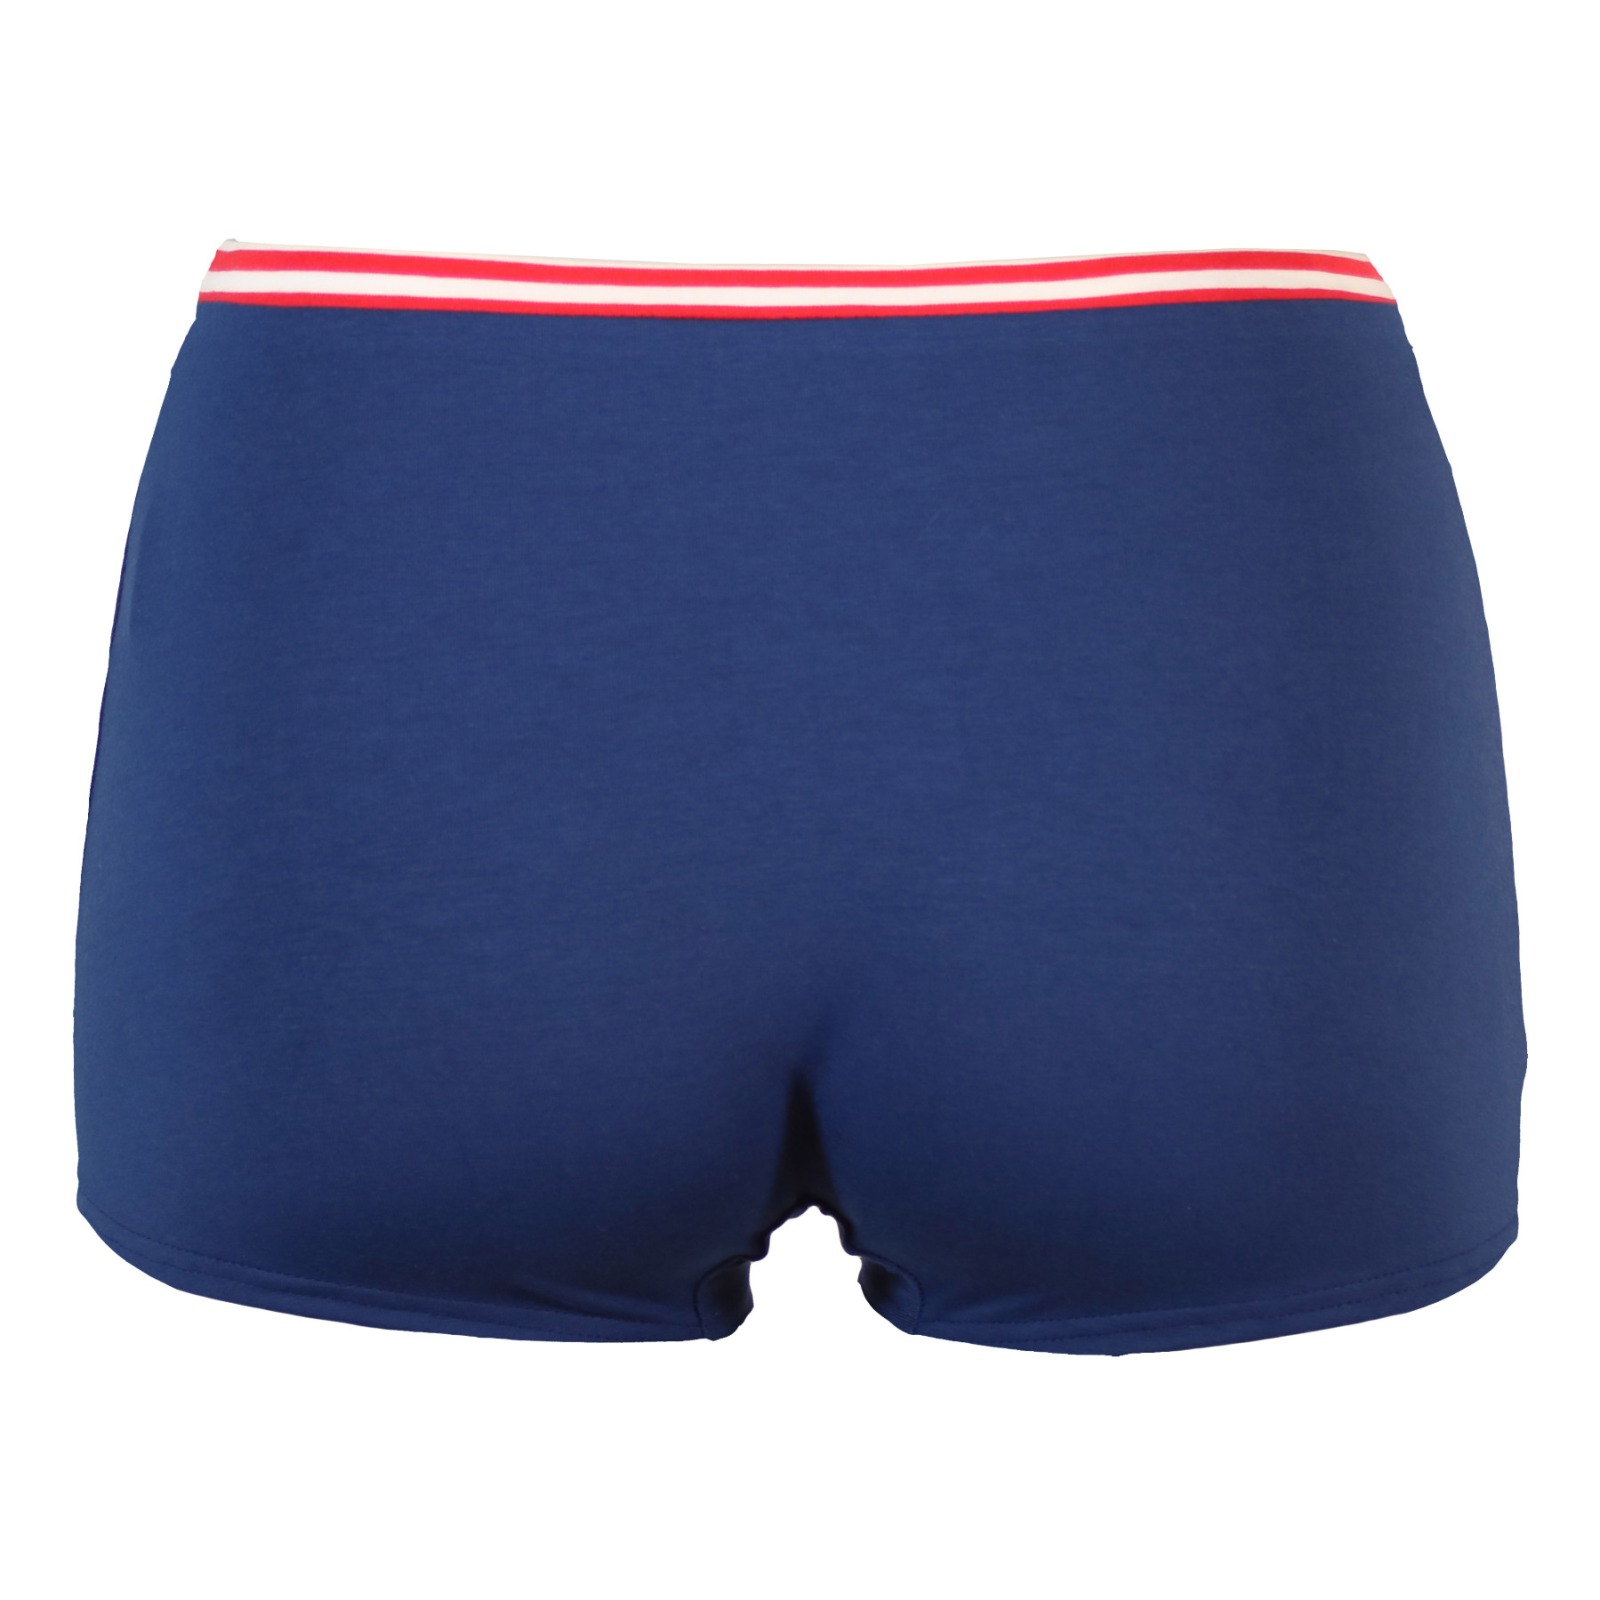 Organic cotton Bikini Shorts Isi Marine / red stripes 2